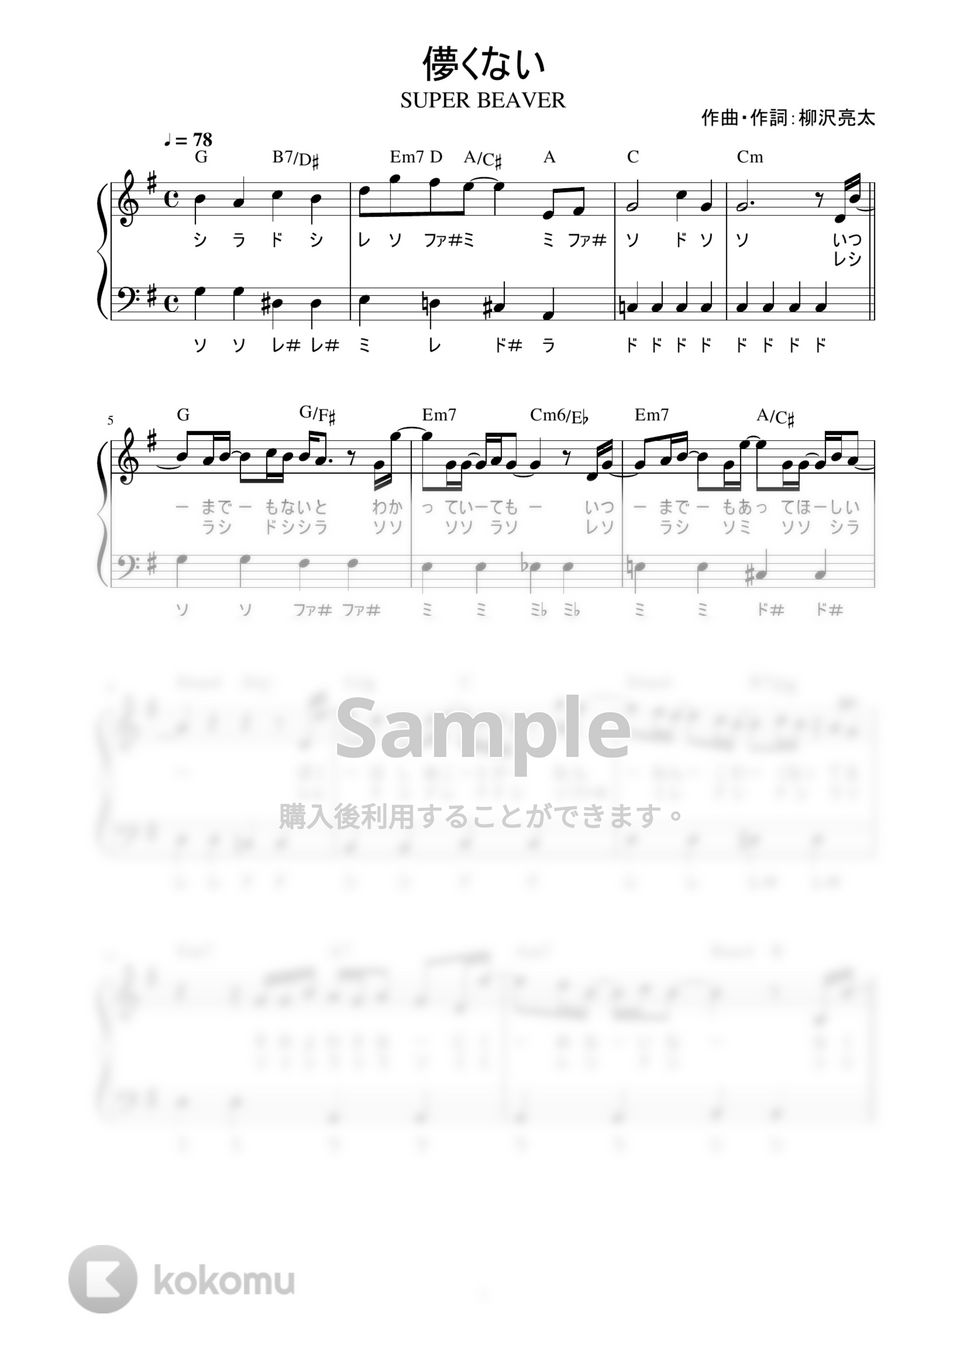 SUPER BEAVER - 儚くない (かんたん / 歌詞付き / ドレミ付き / 初心者) by piano.tokyo